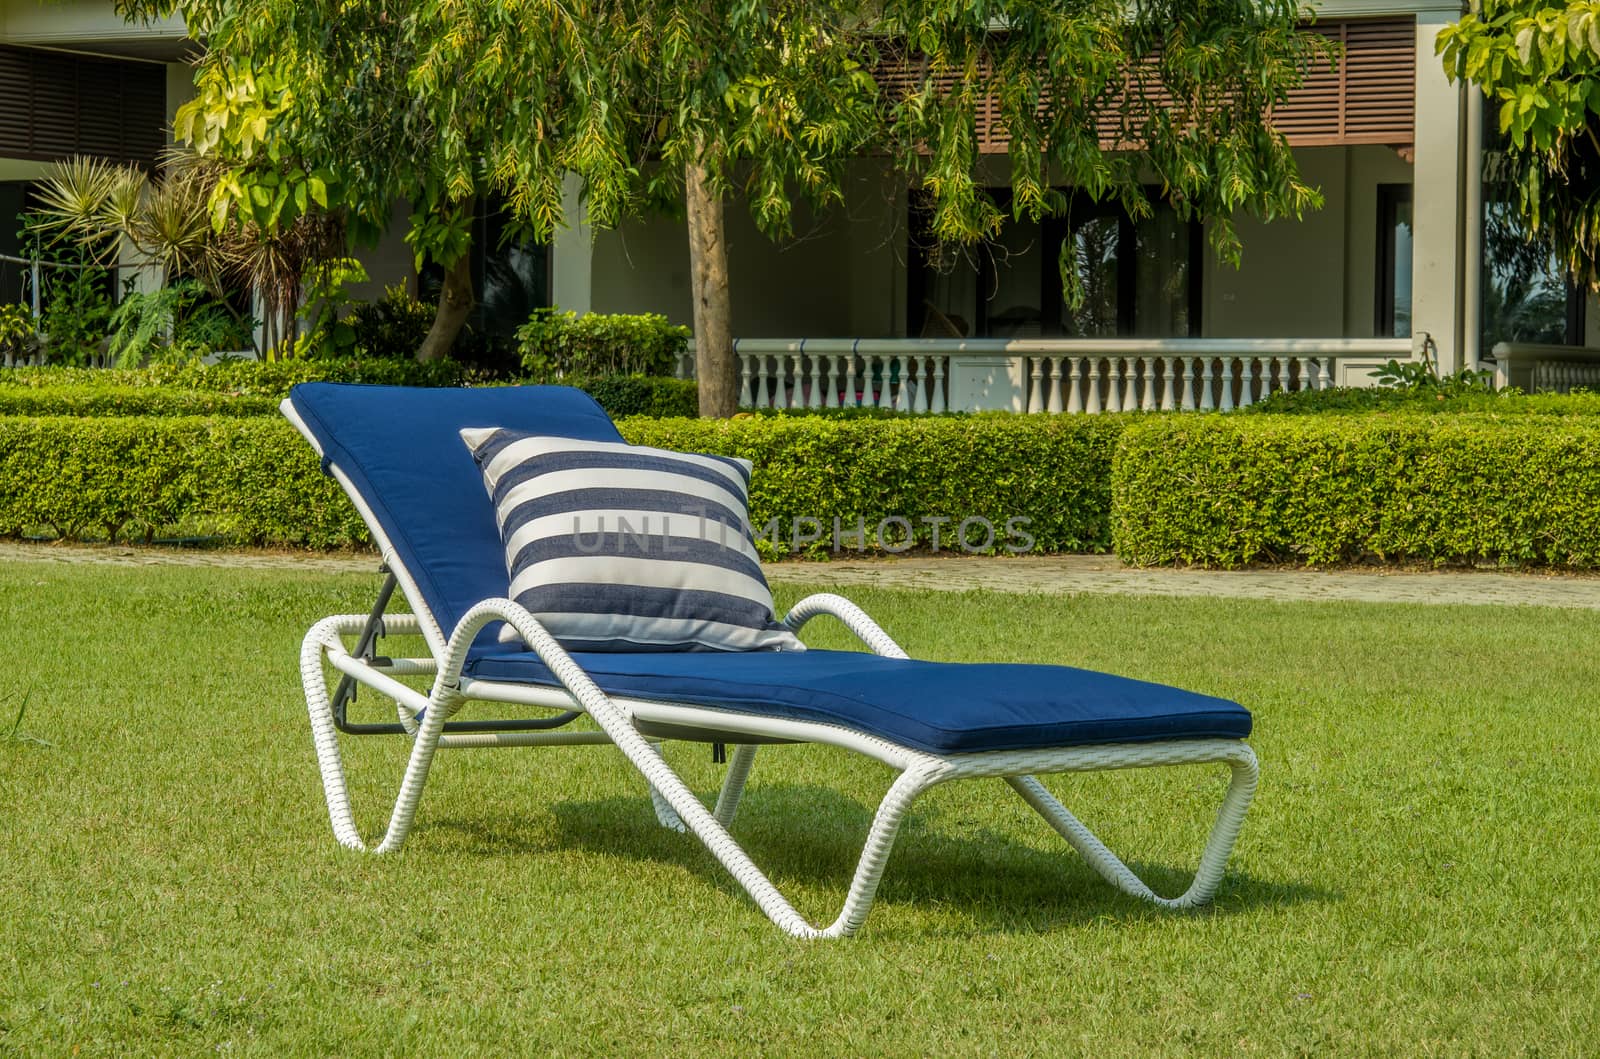 Rattan sun lounger with blue cushion in the green garden